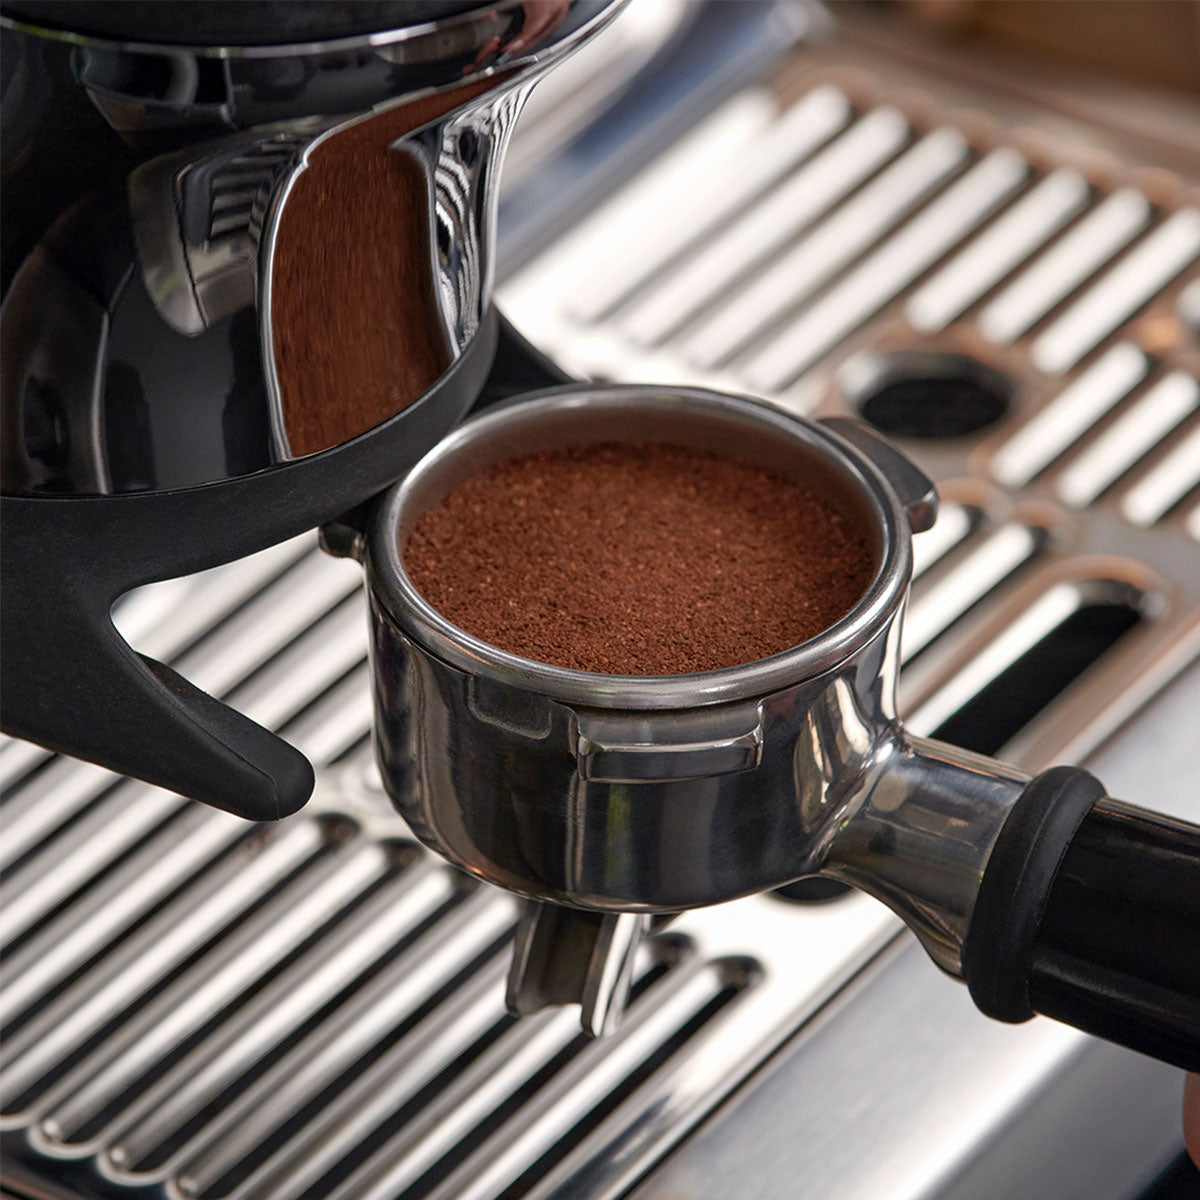 Breville Barista Express Impress Espresso Machine, Black Truffle